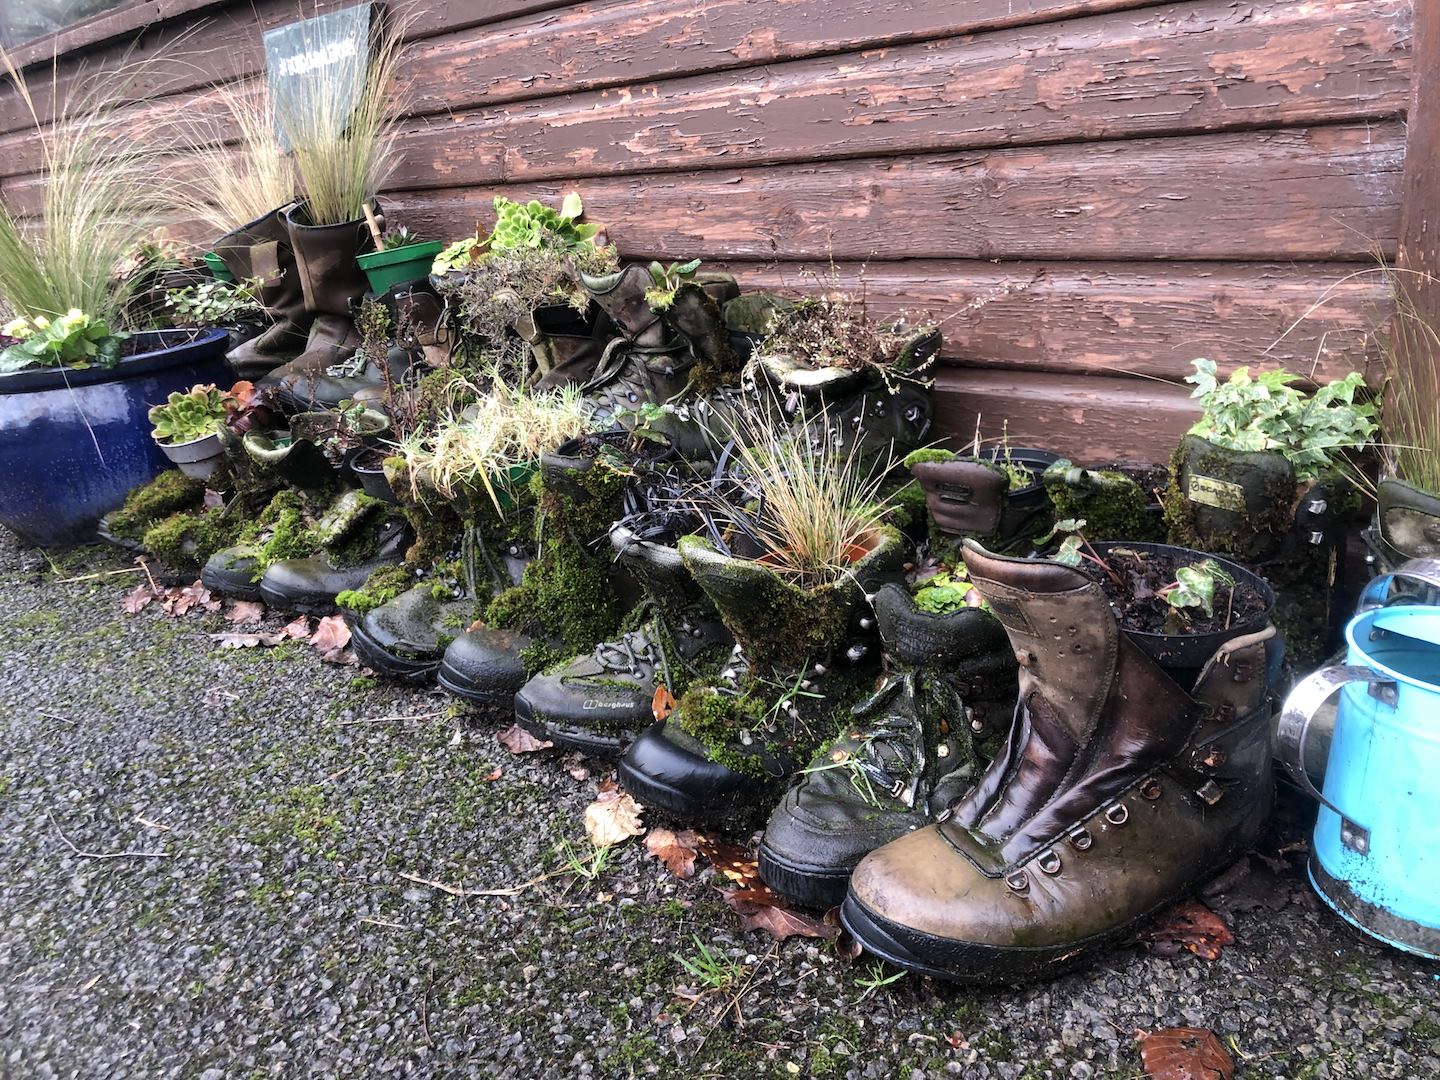 The boot garden approach. Photo: Sarah Ryan